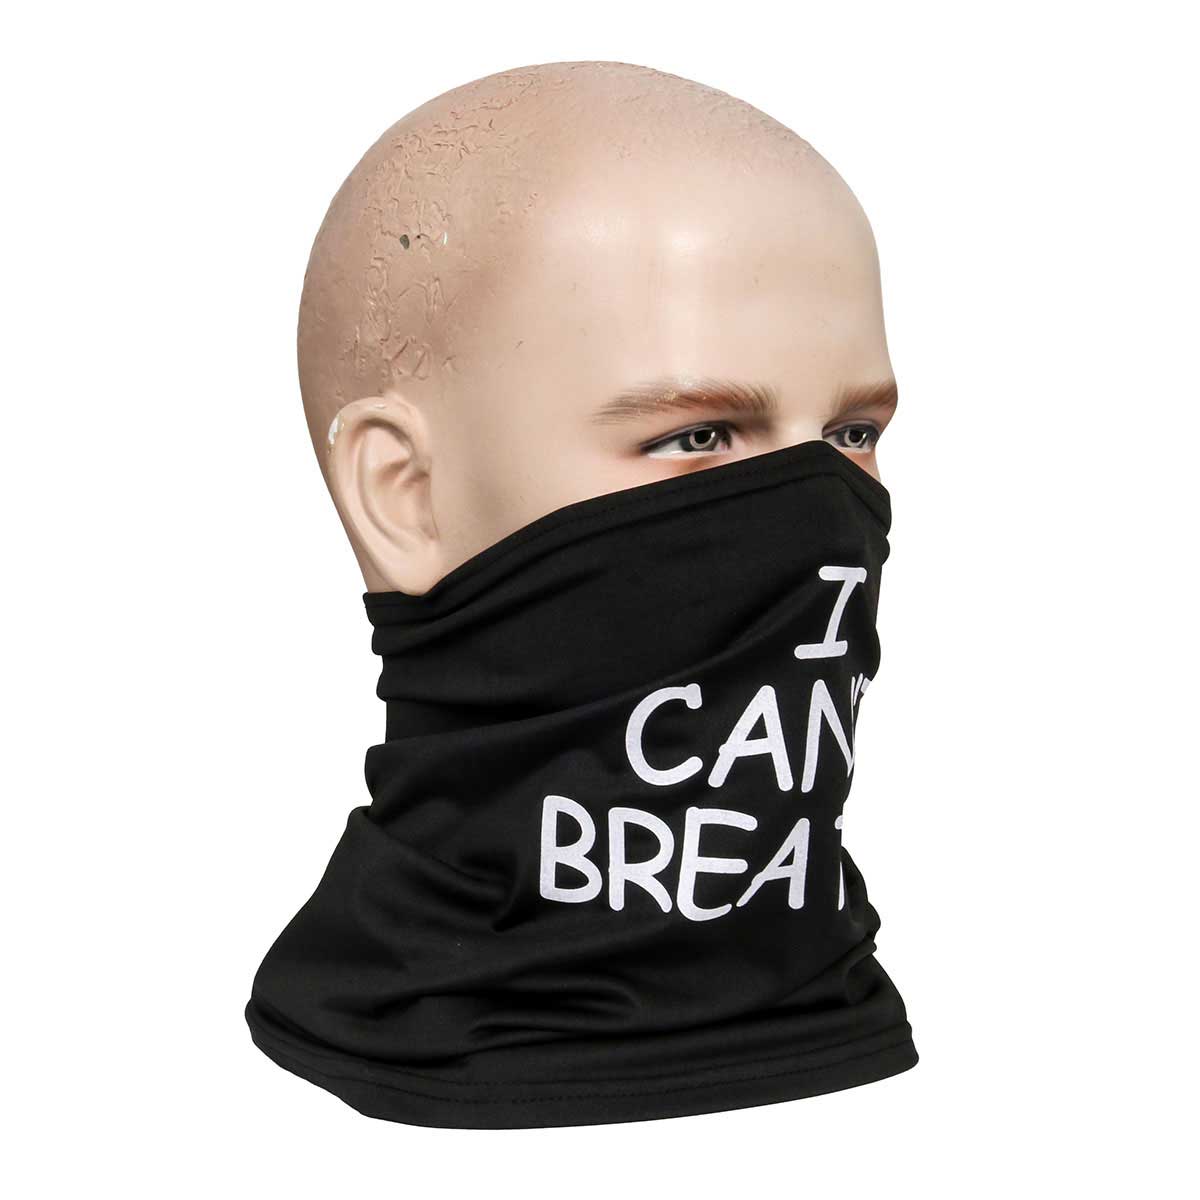 I Cant Breathe Mask Bandana Face Mask Neck Gaiter For Men And Women